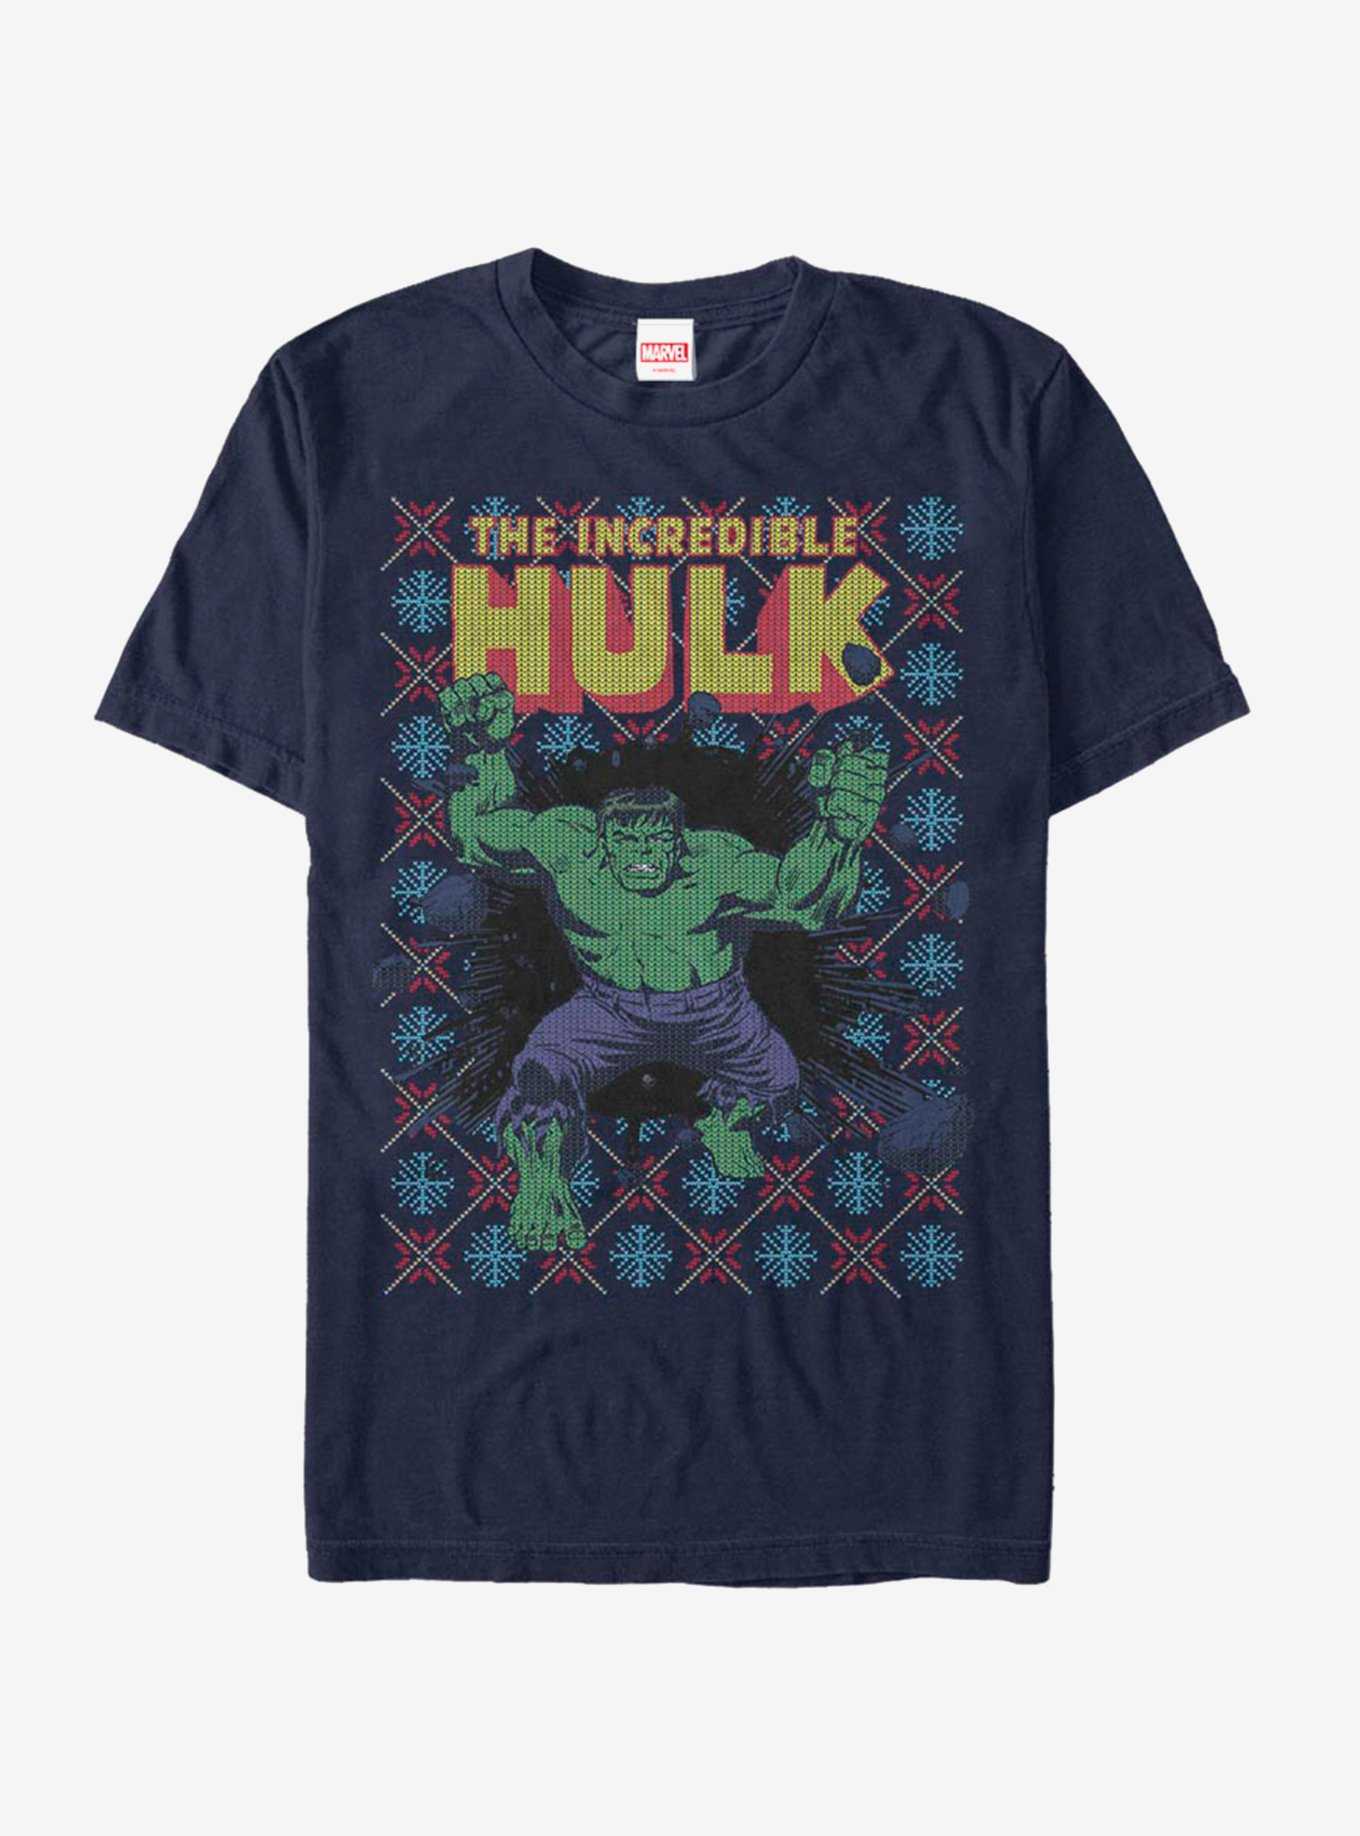 Marvel Hulk Smash Christmas Pattern T-Shirt, , hi-res